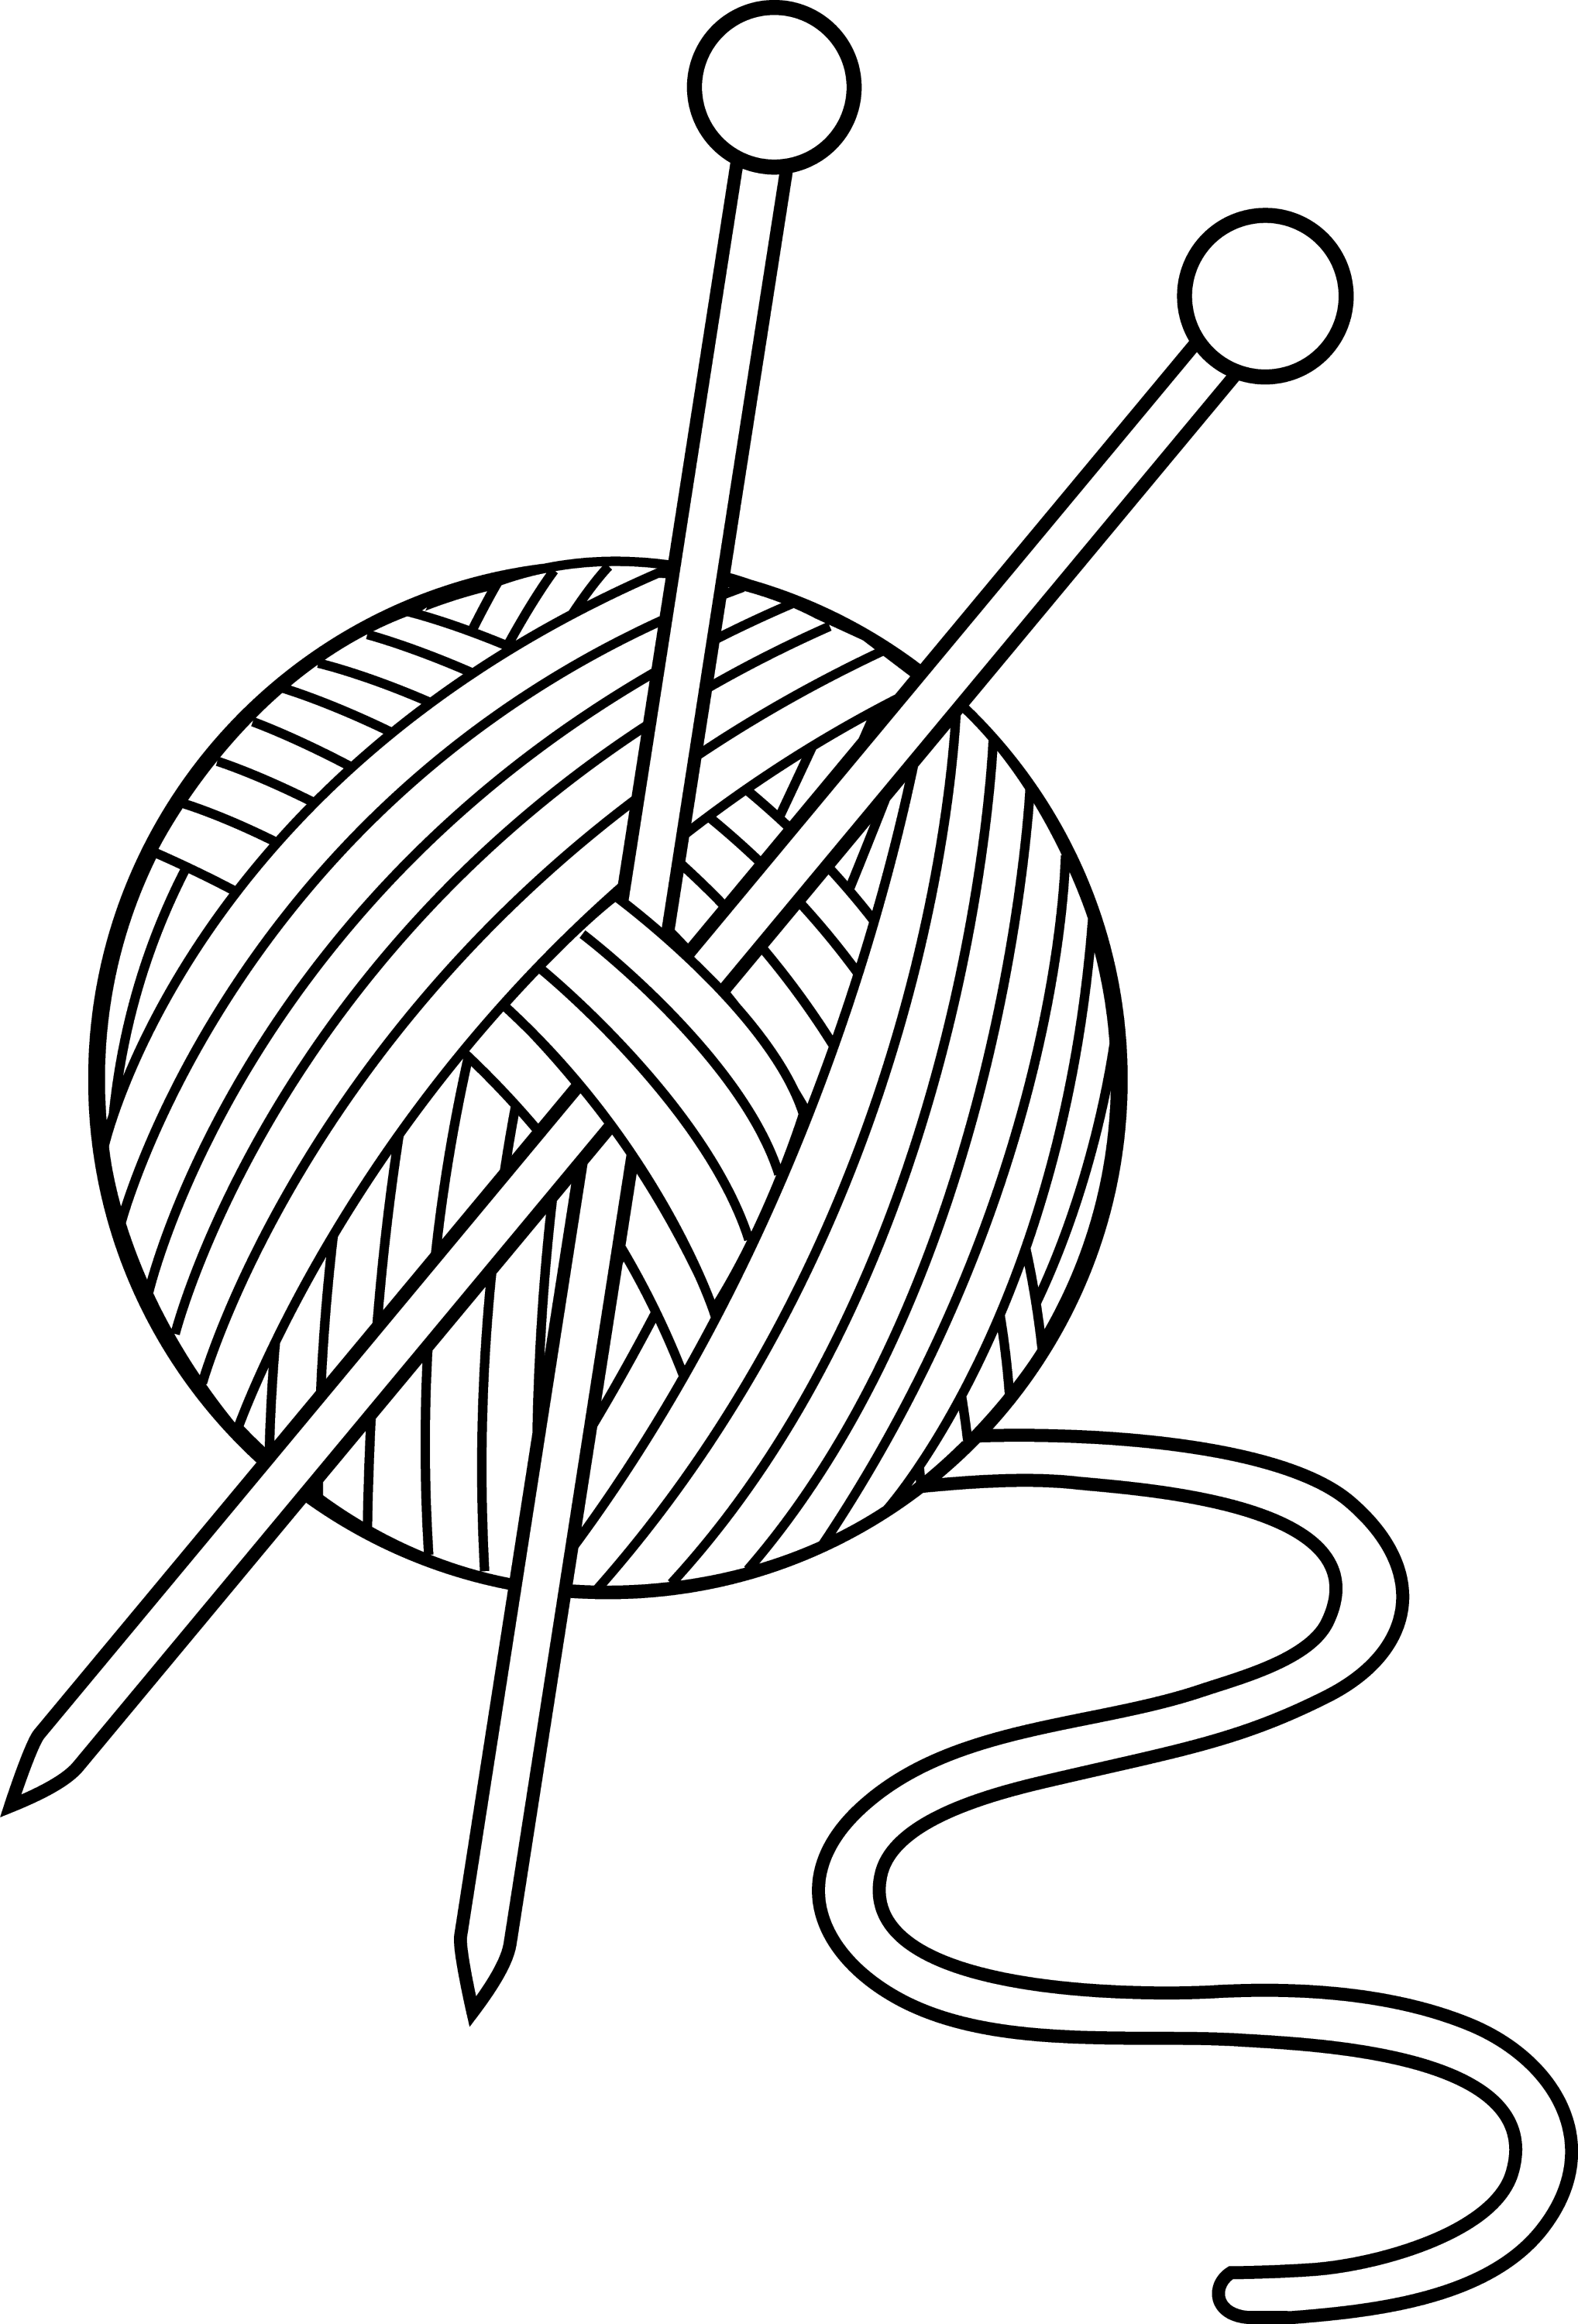 ball of yarn clipart - photo #24